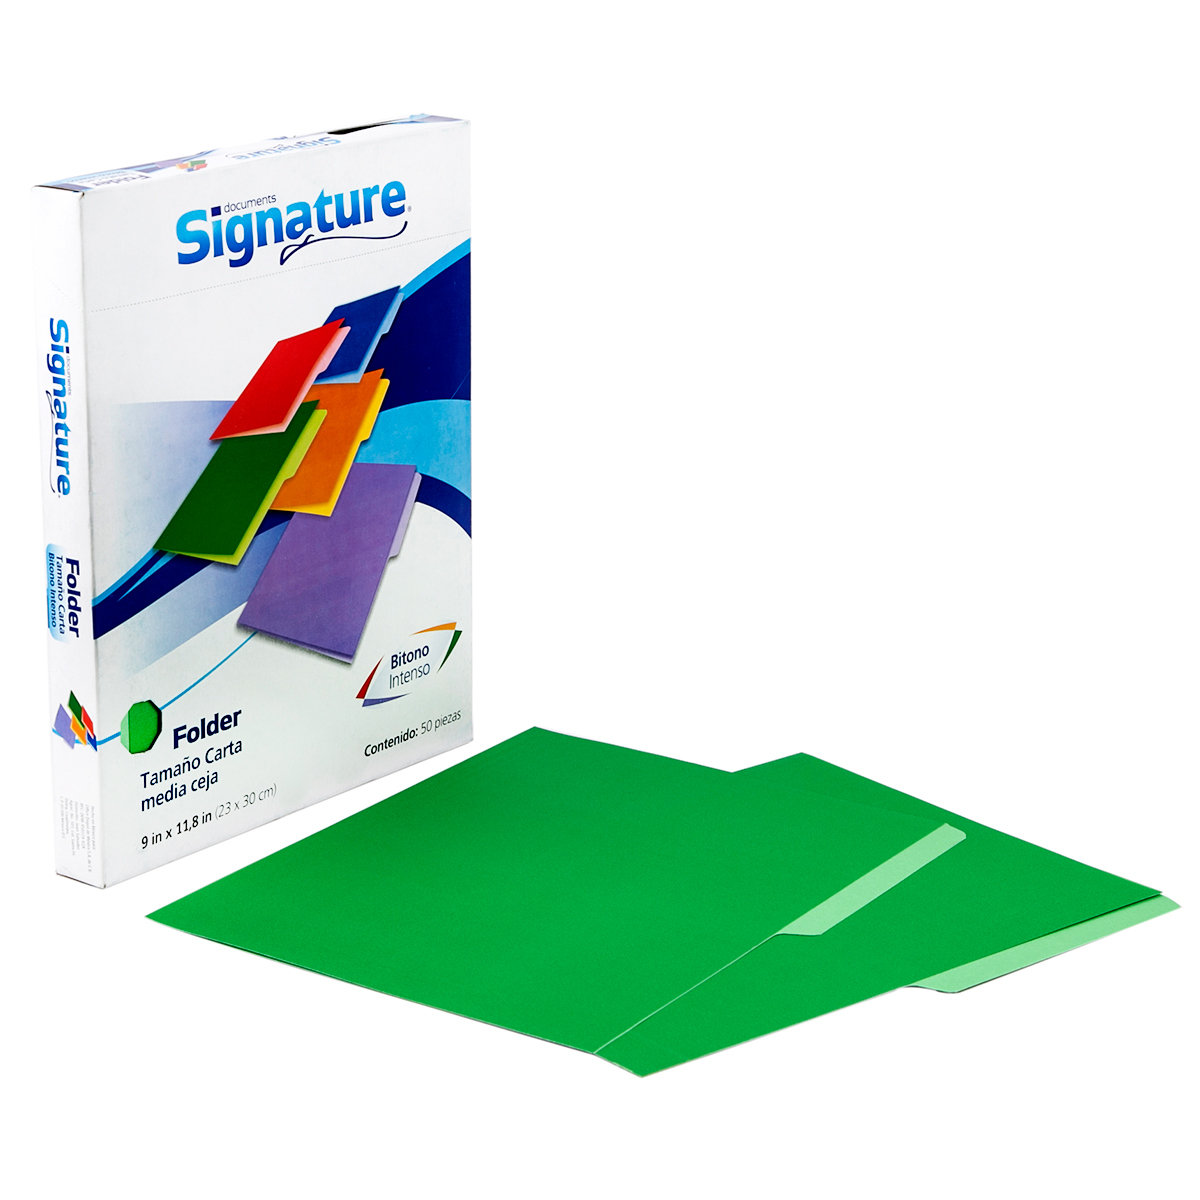 Folders Carta con Media Ceja Bitono Signature / Verde / 50 piezas